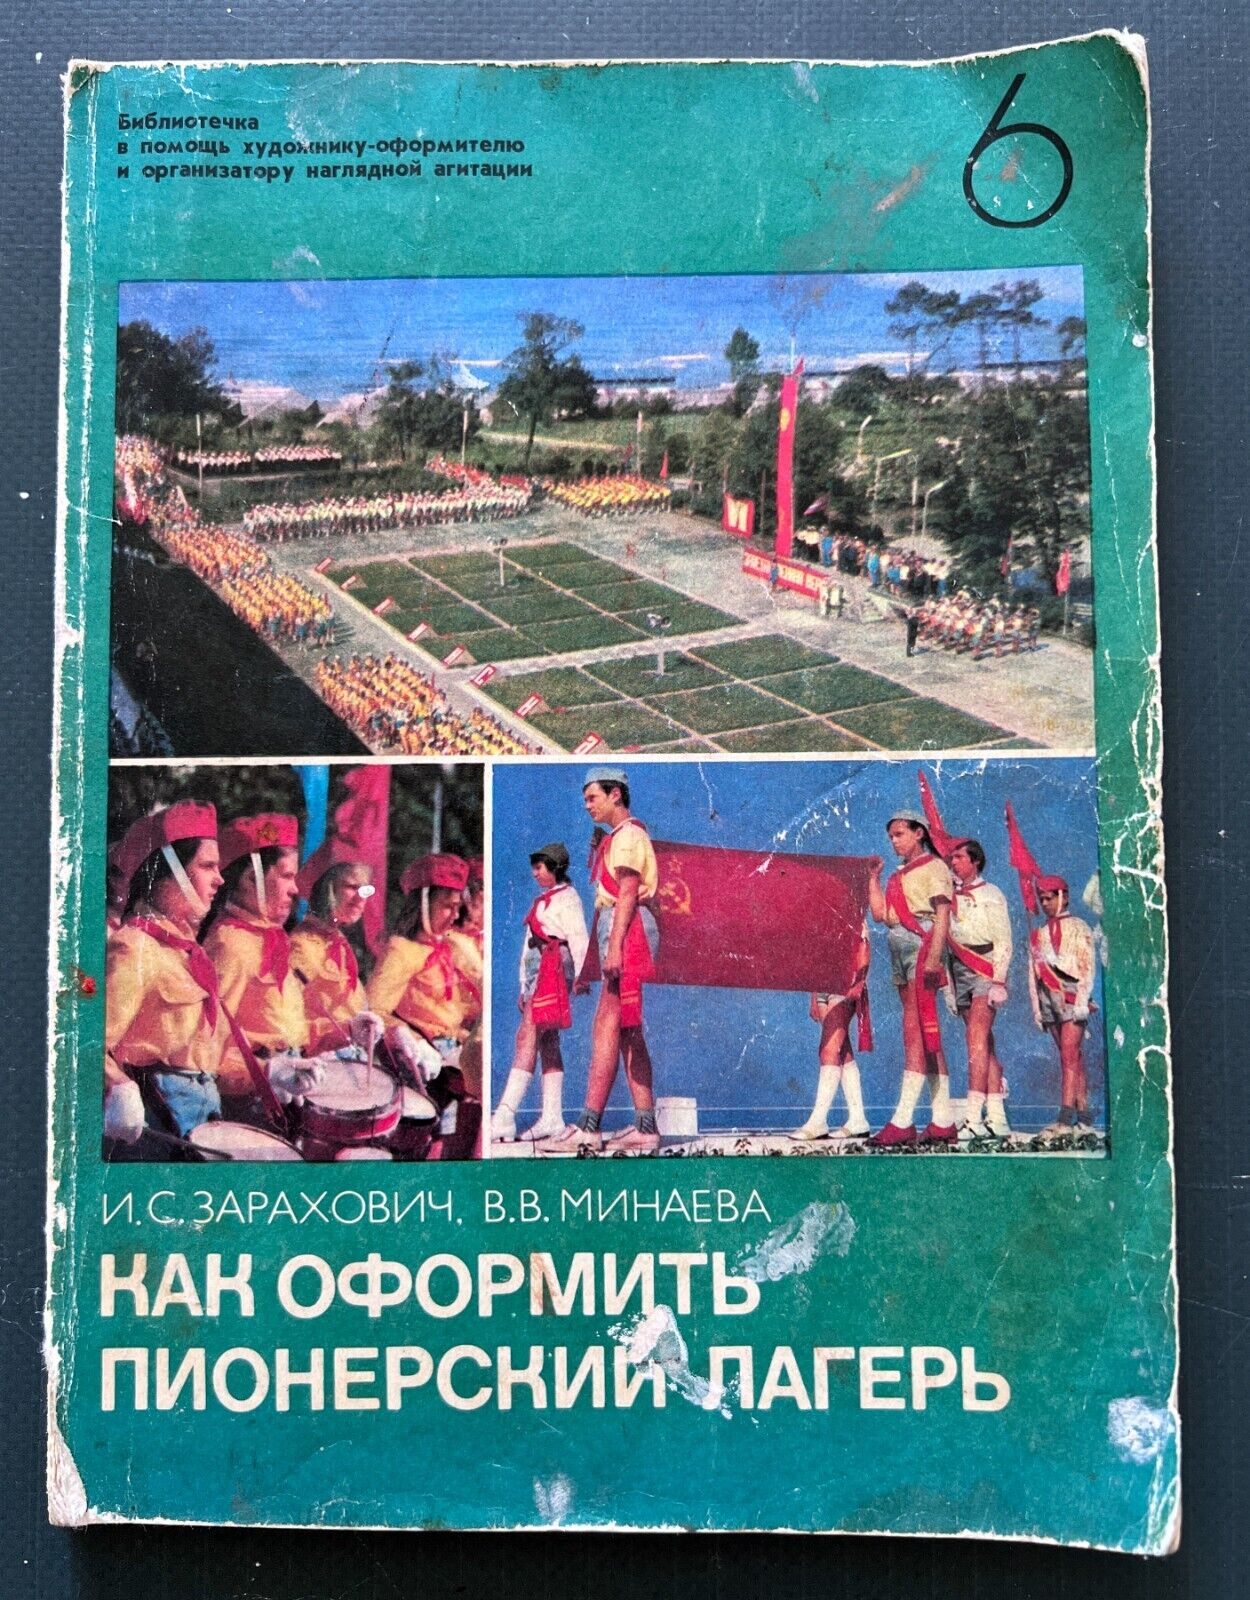 1977 Pioneer Camp Agitation Propaganda Socialist realism Poster Art Russian Book